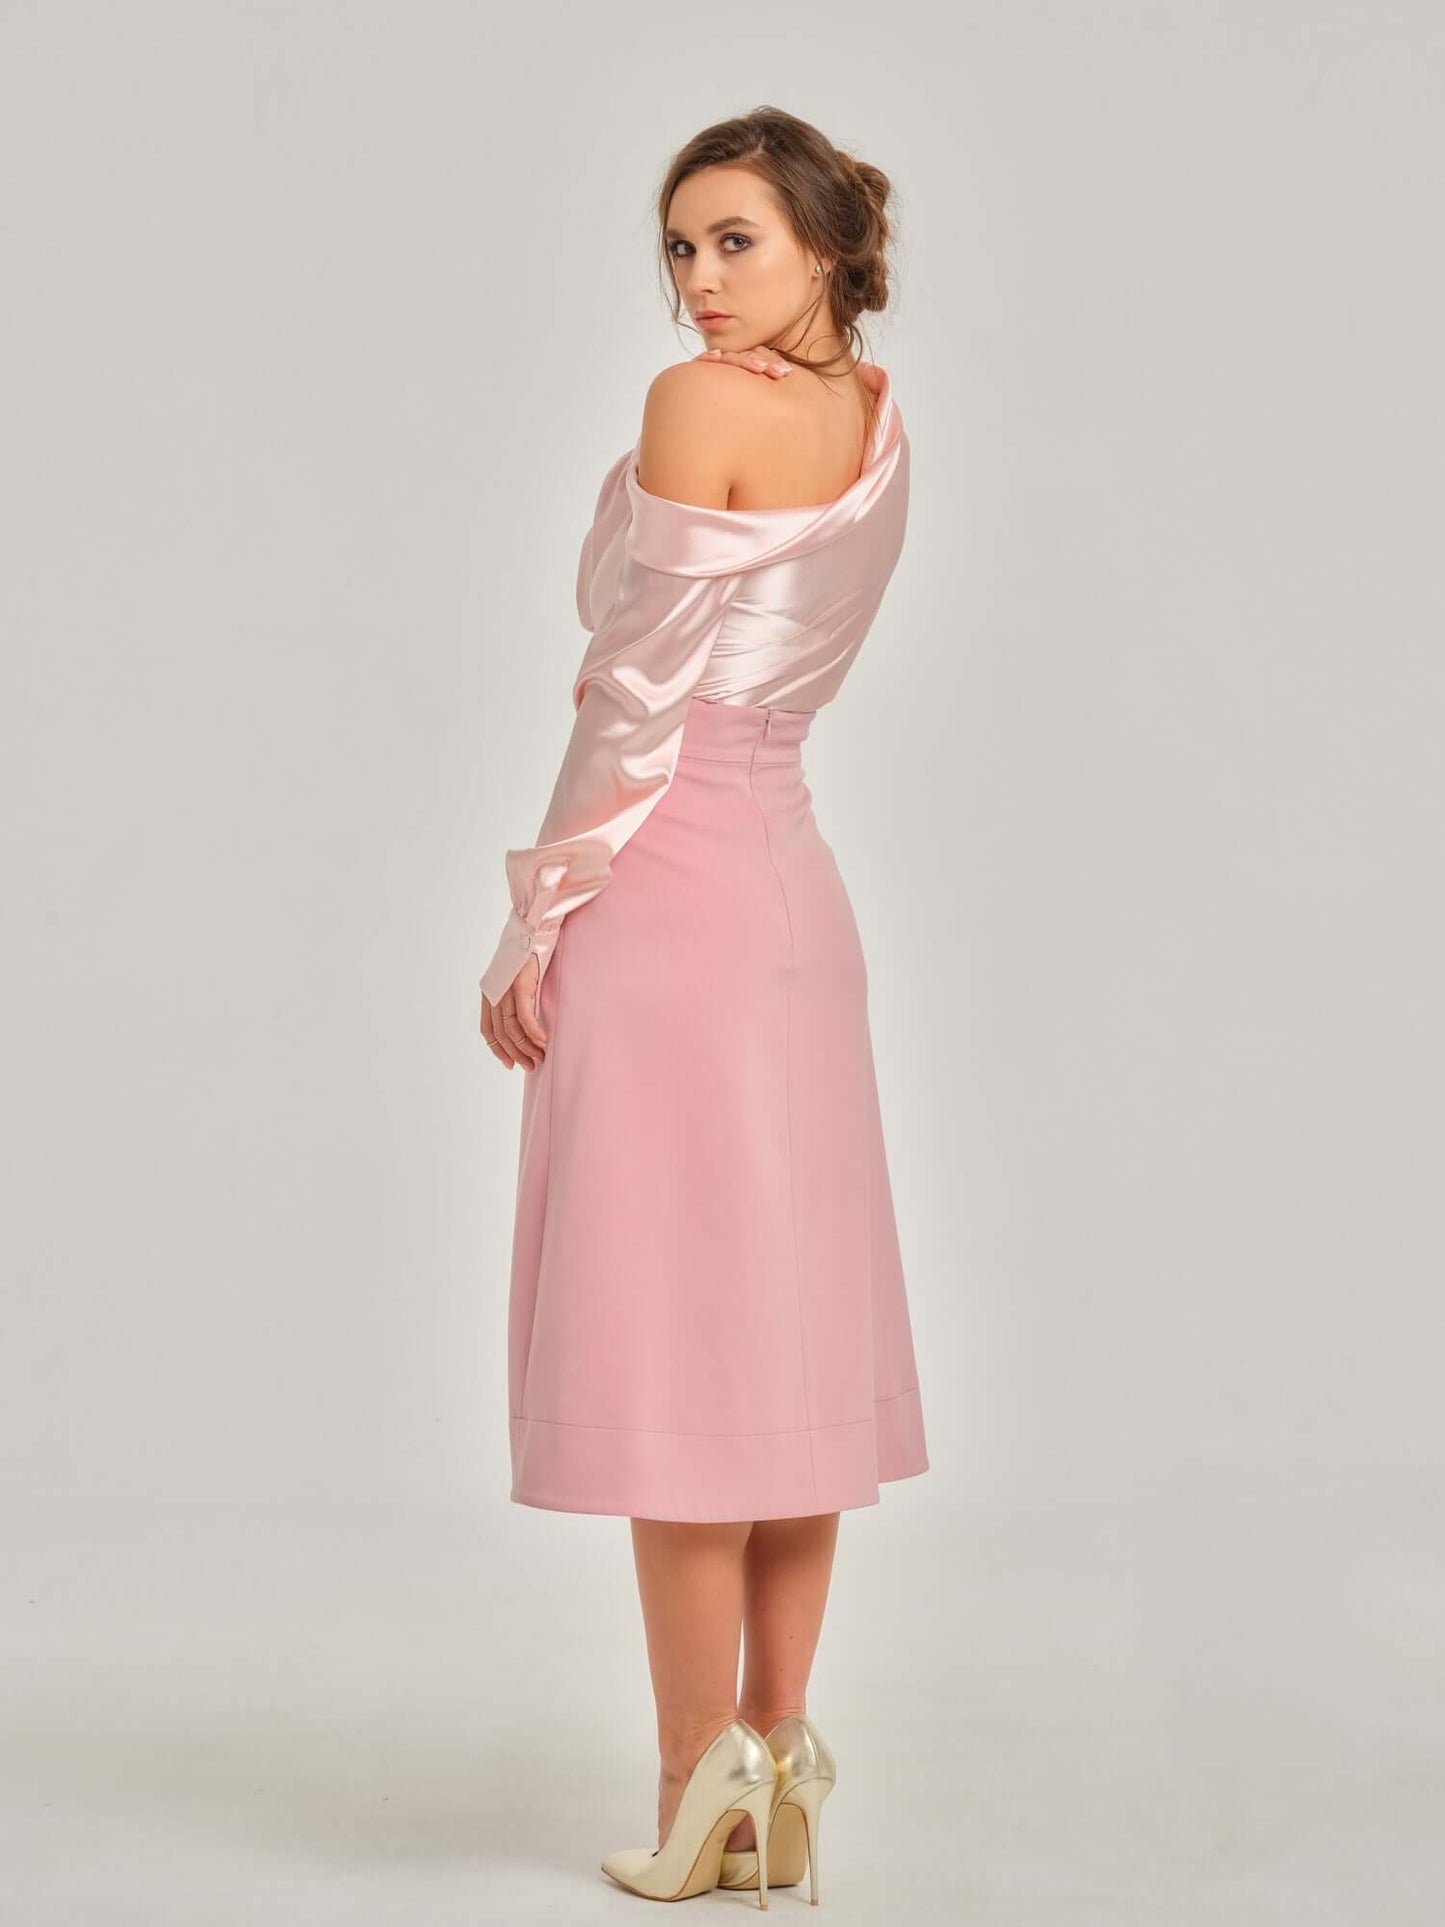 Rose Blush Draped Off-Shoulder Shirt by Tia Dorraine Women's Luxury Fashion Designer Clothing Brand